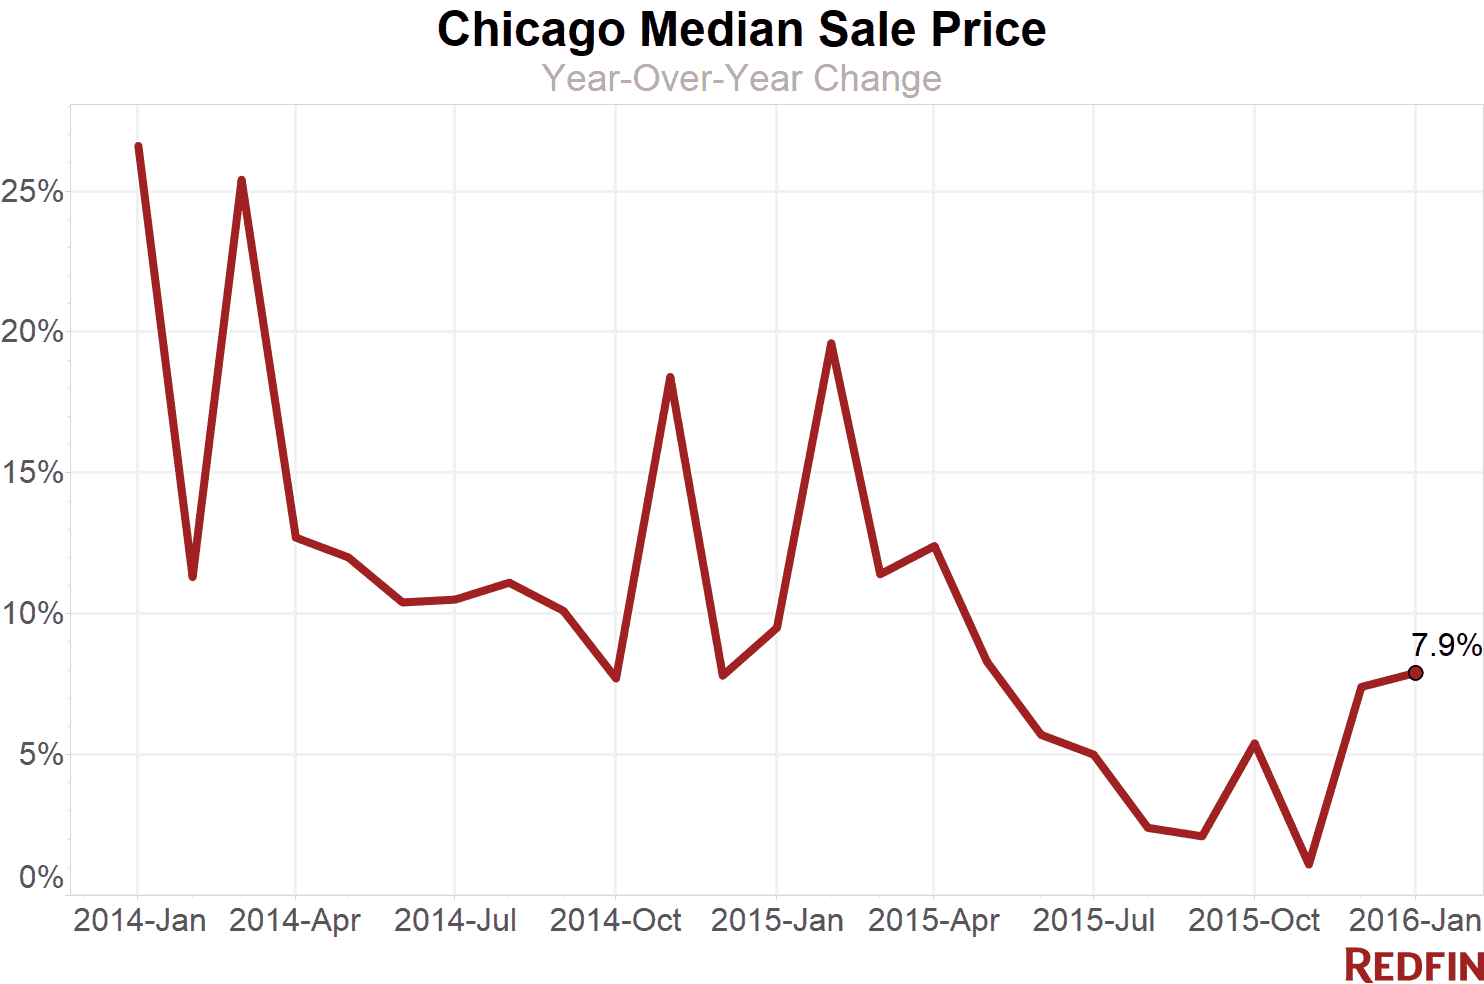 Chicago Median Sale Price Jan 2016